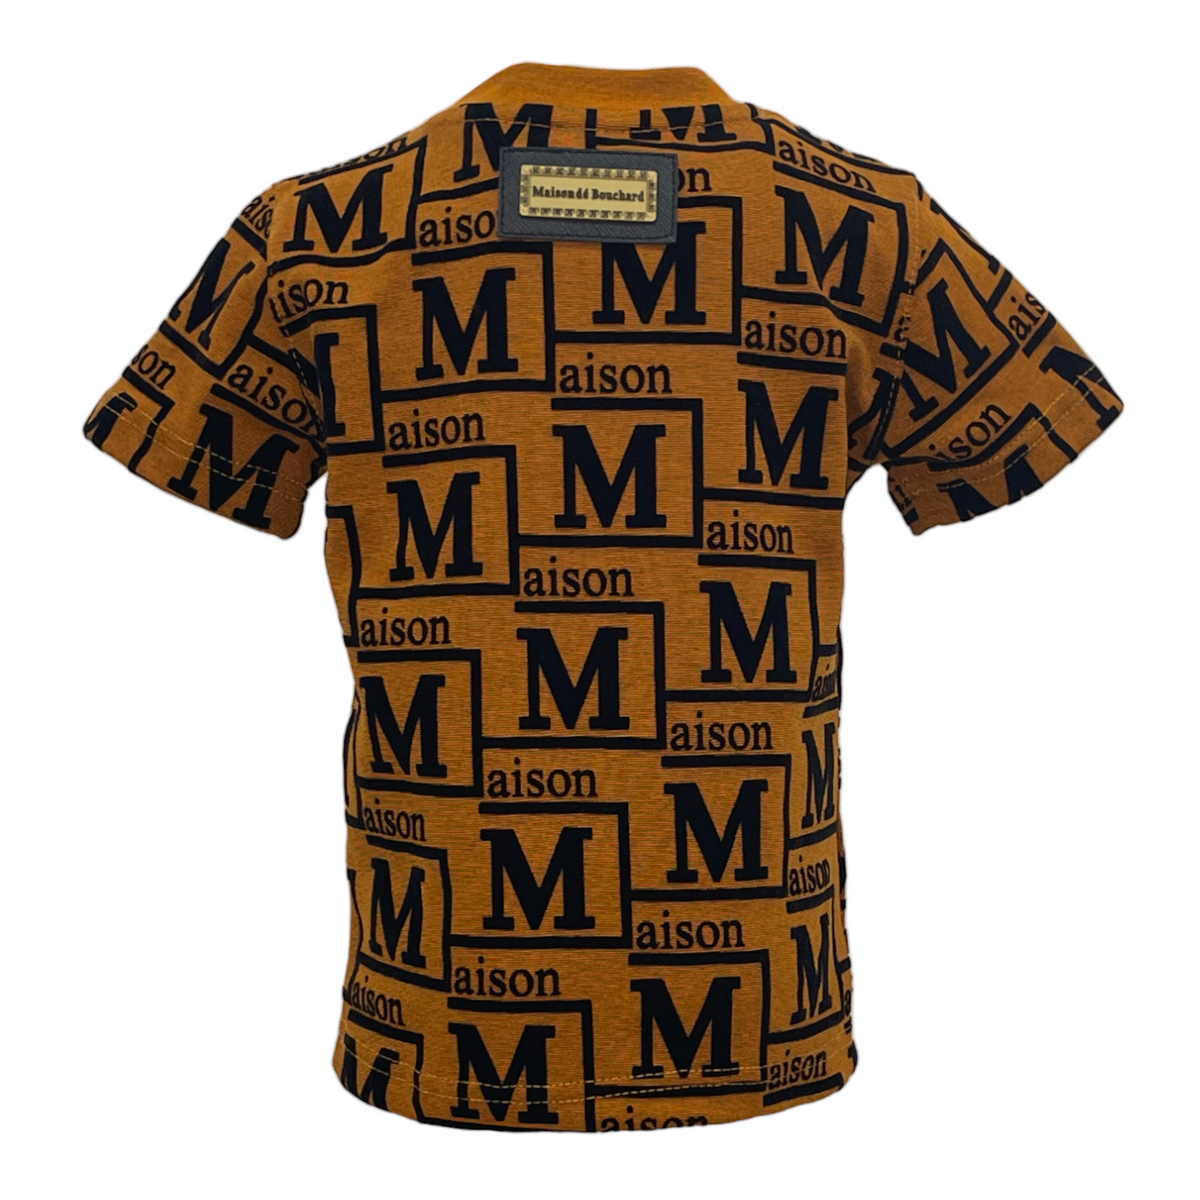 MDB Couture Kid's Monogram Woven T-Shirt - Copper